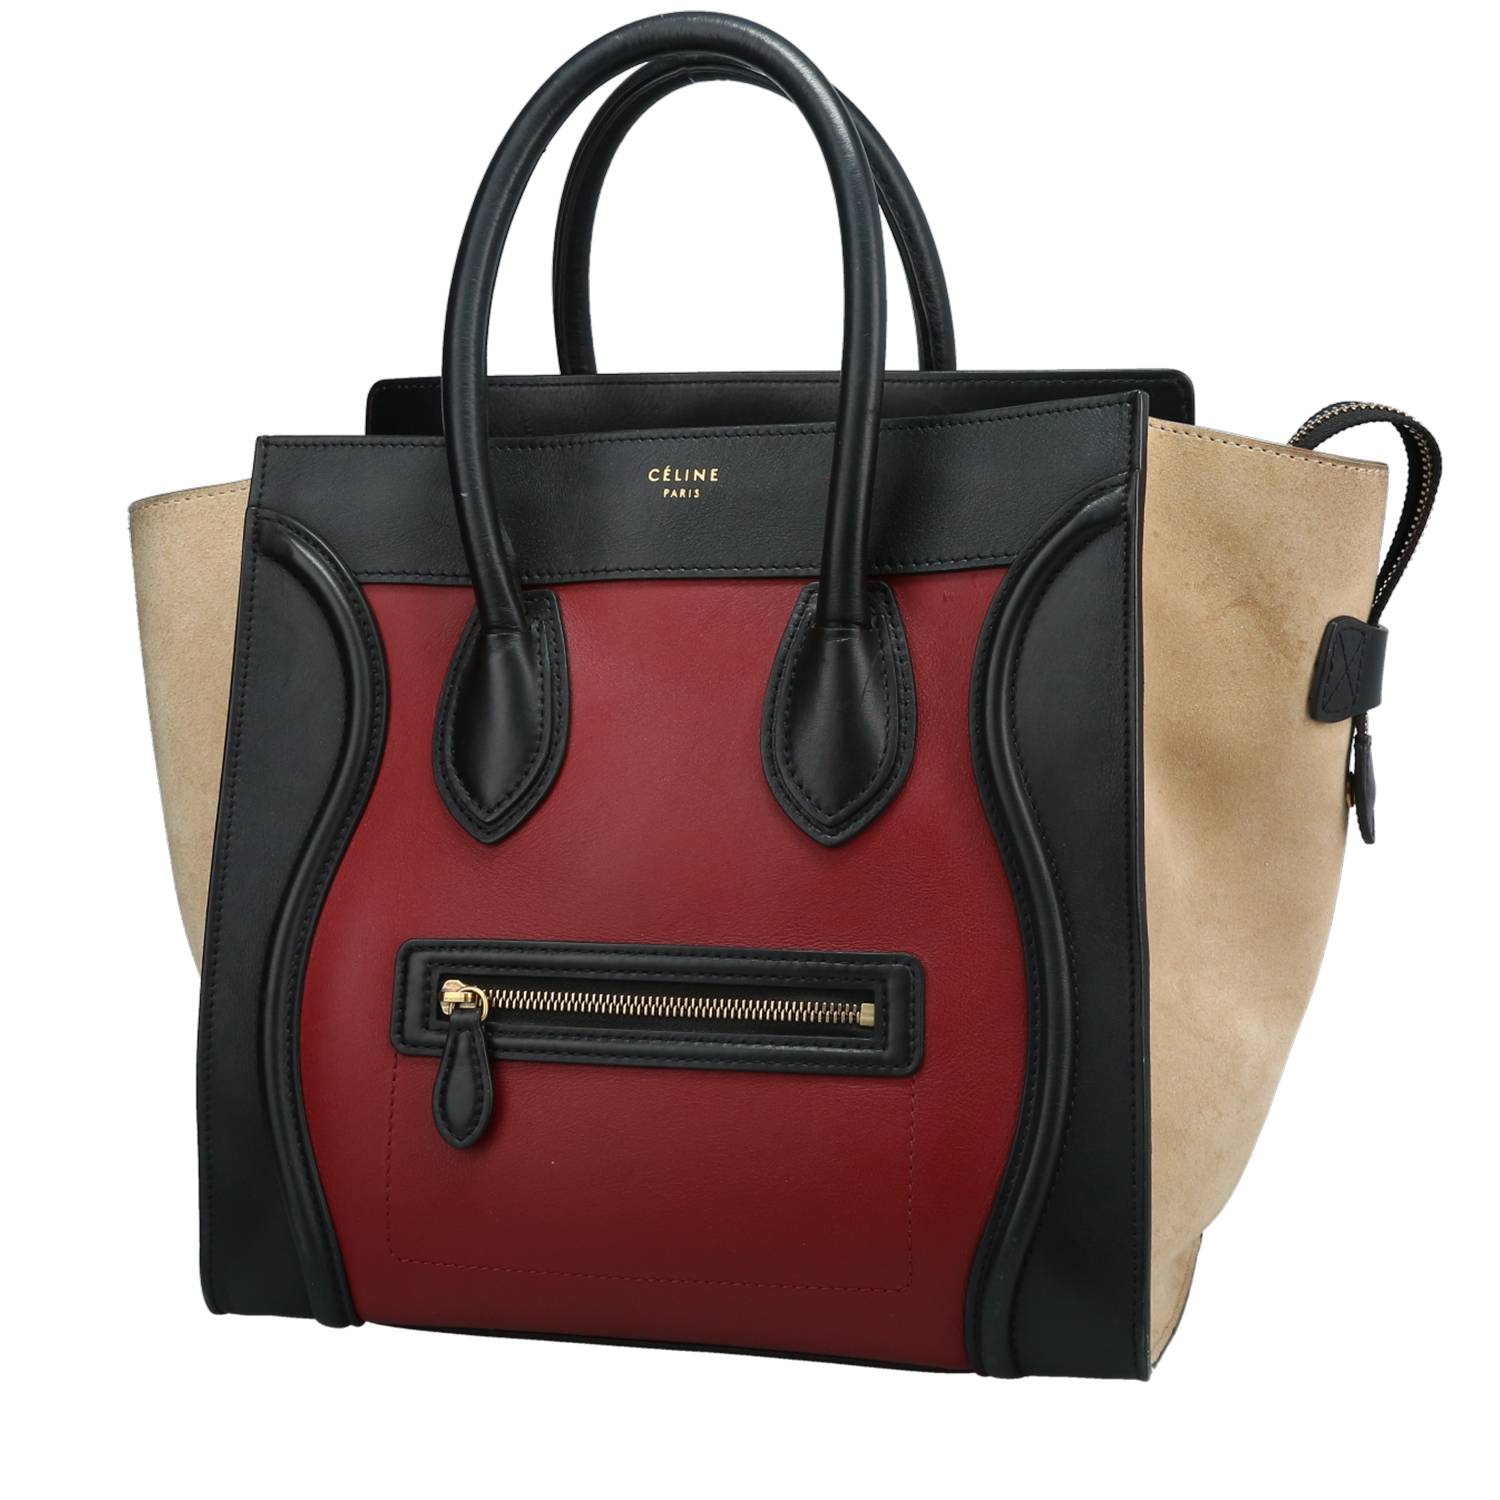 Luggage Mini Handbag In Burgundy And Black Leather And Beige